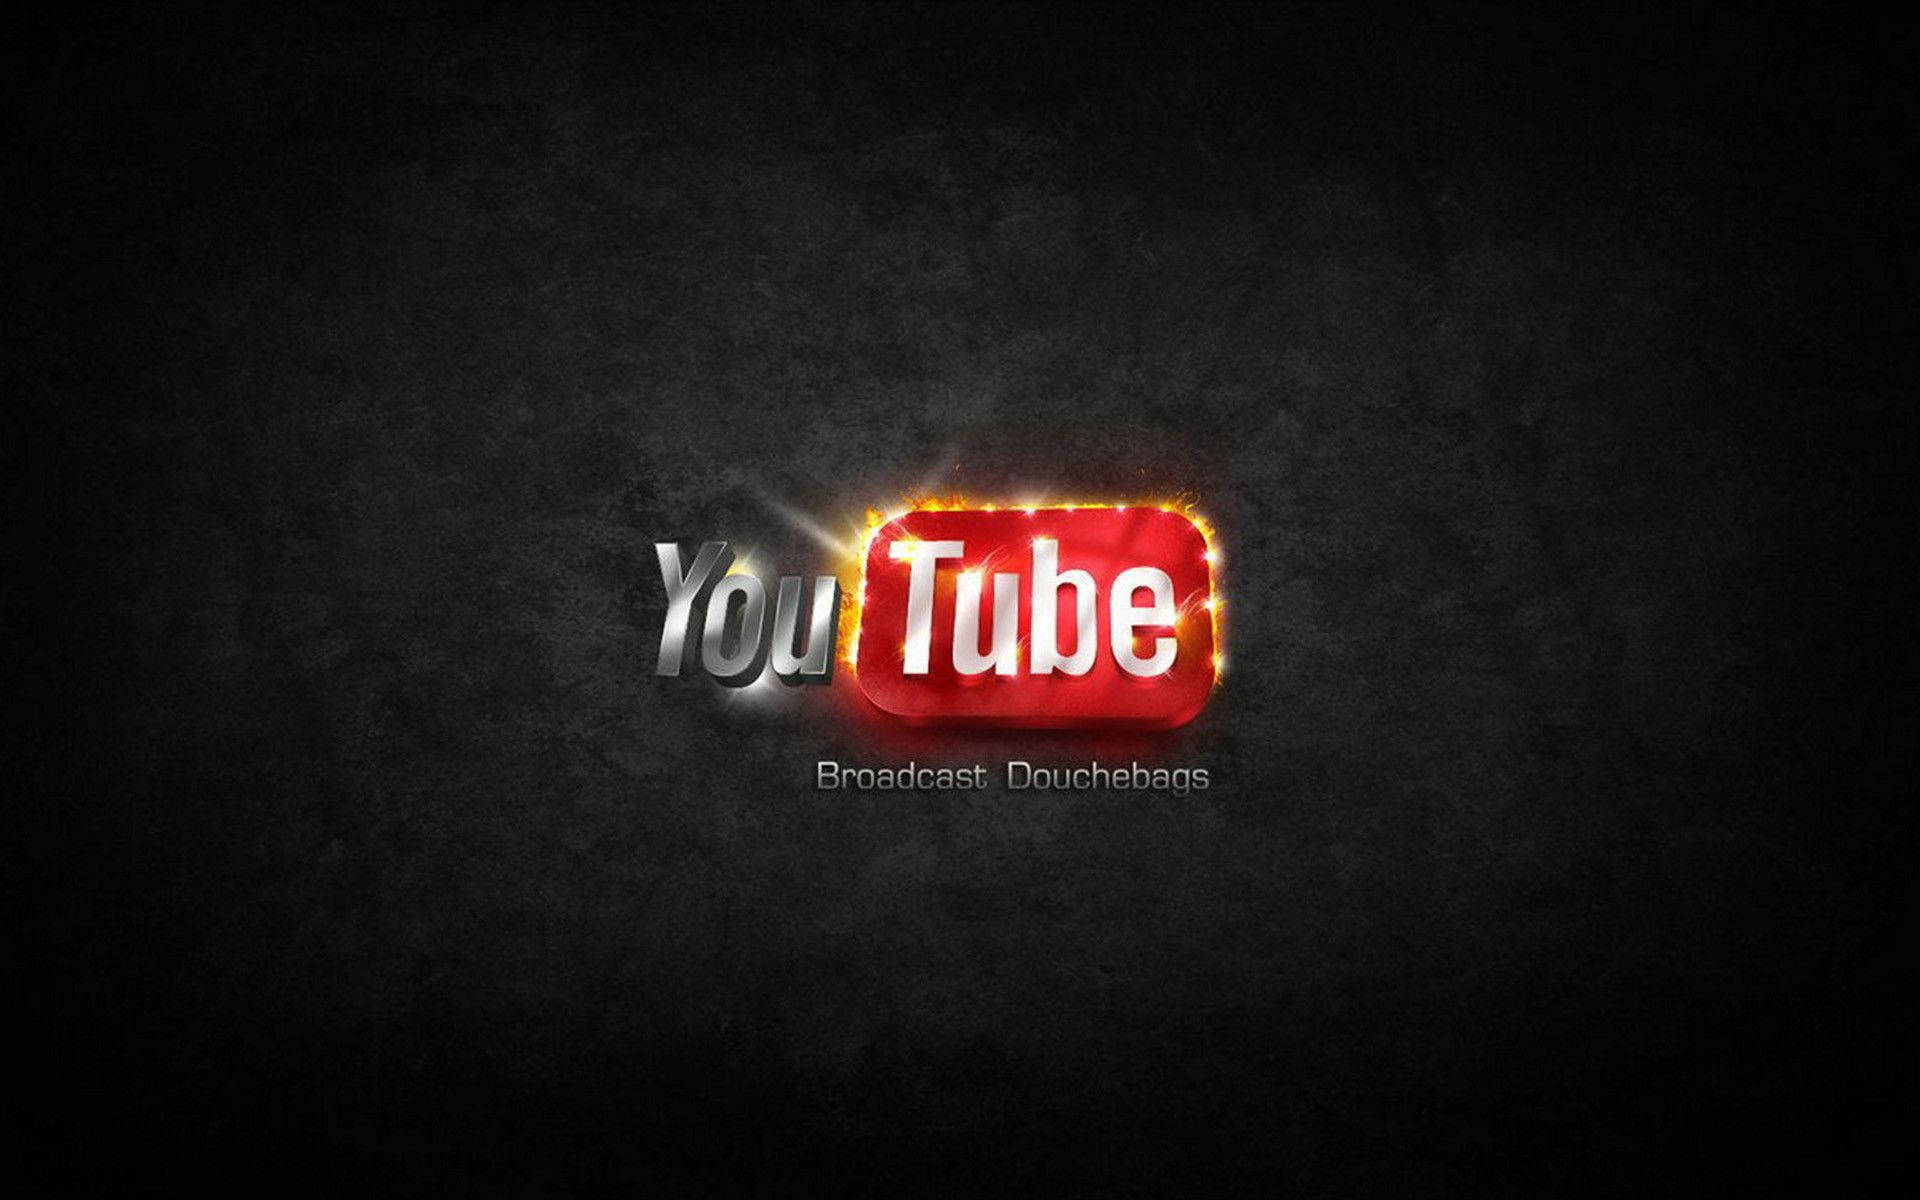 Top 999+ Youtube Logo Wallpaper Full HD, 4K Free to Use